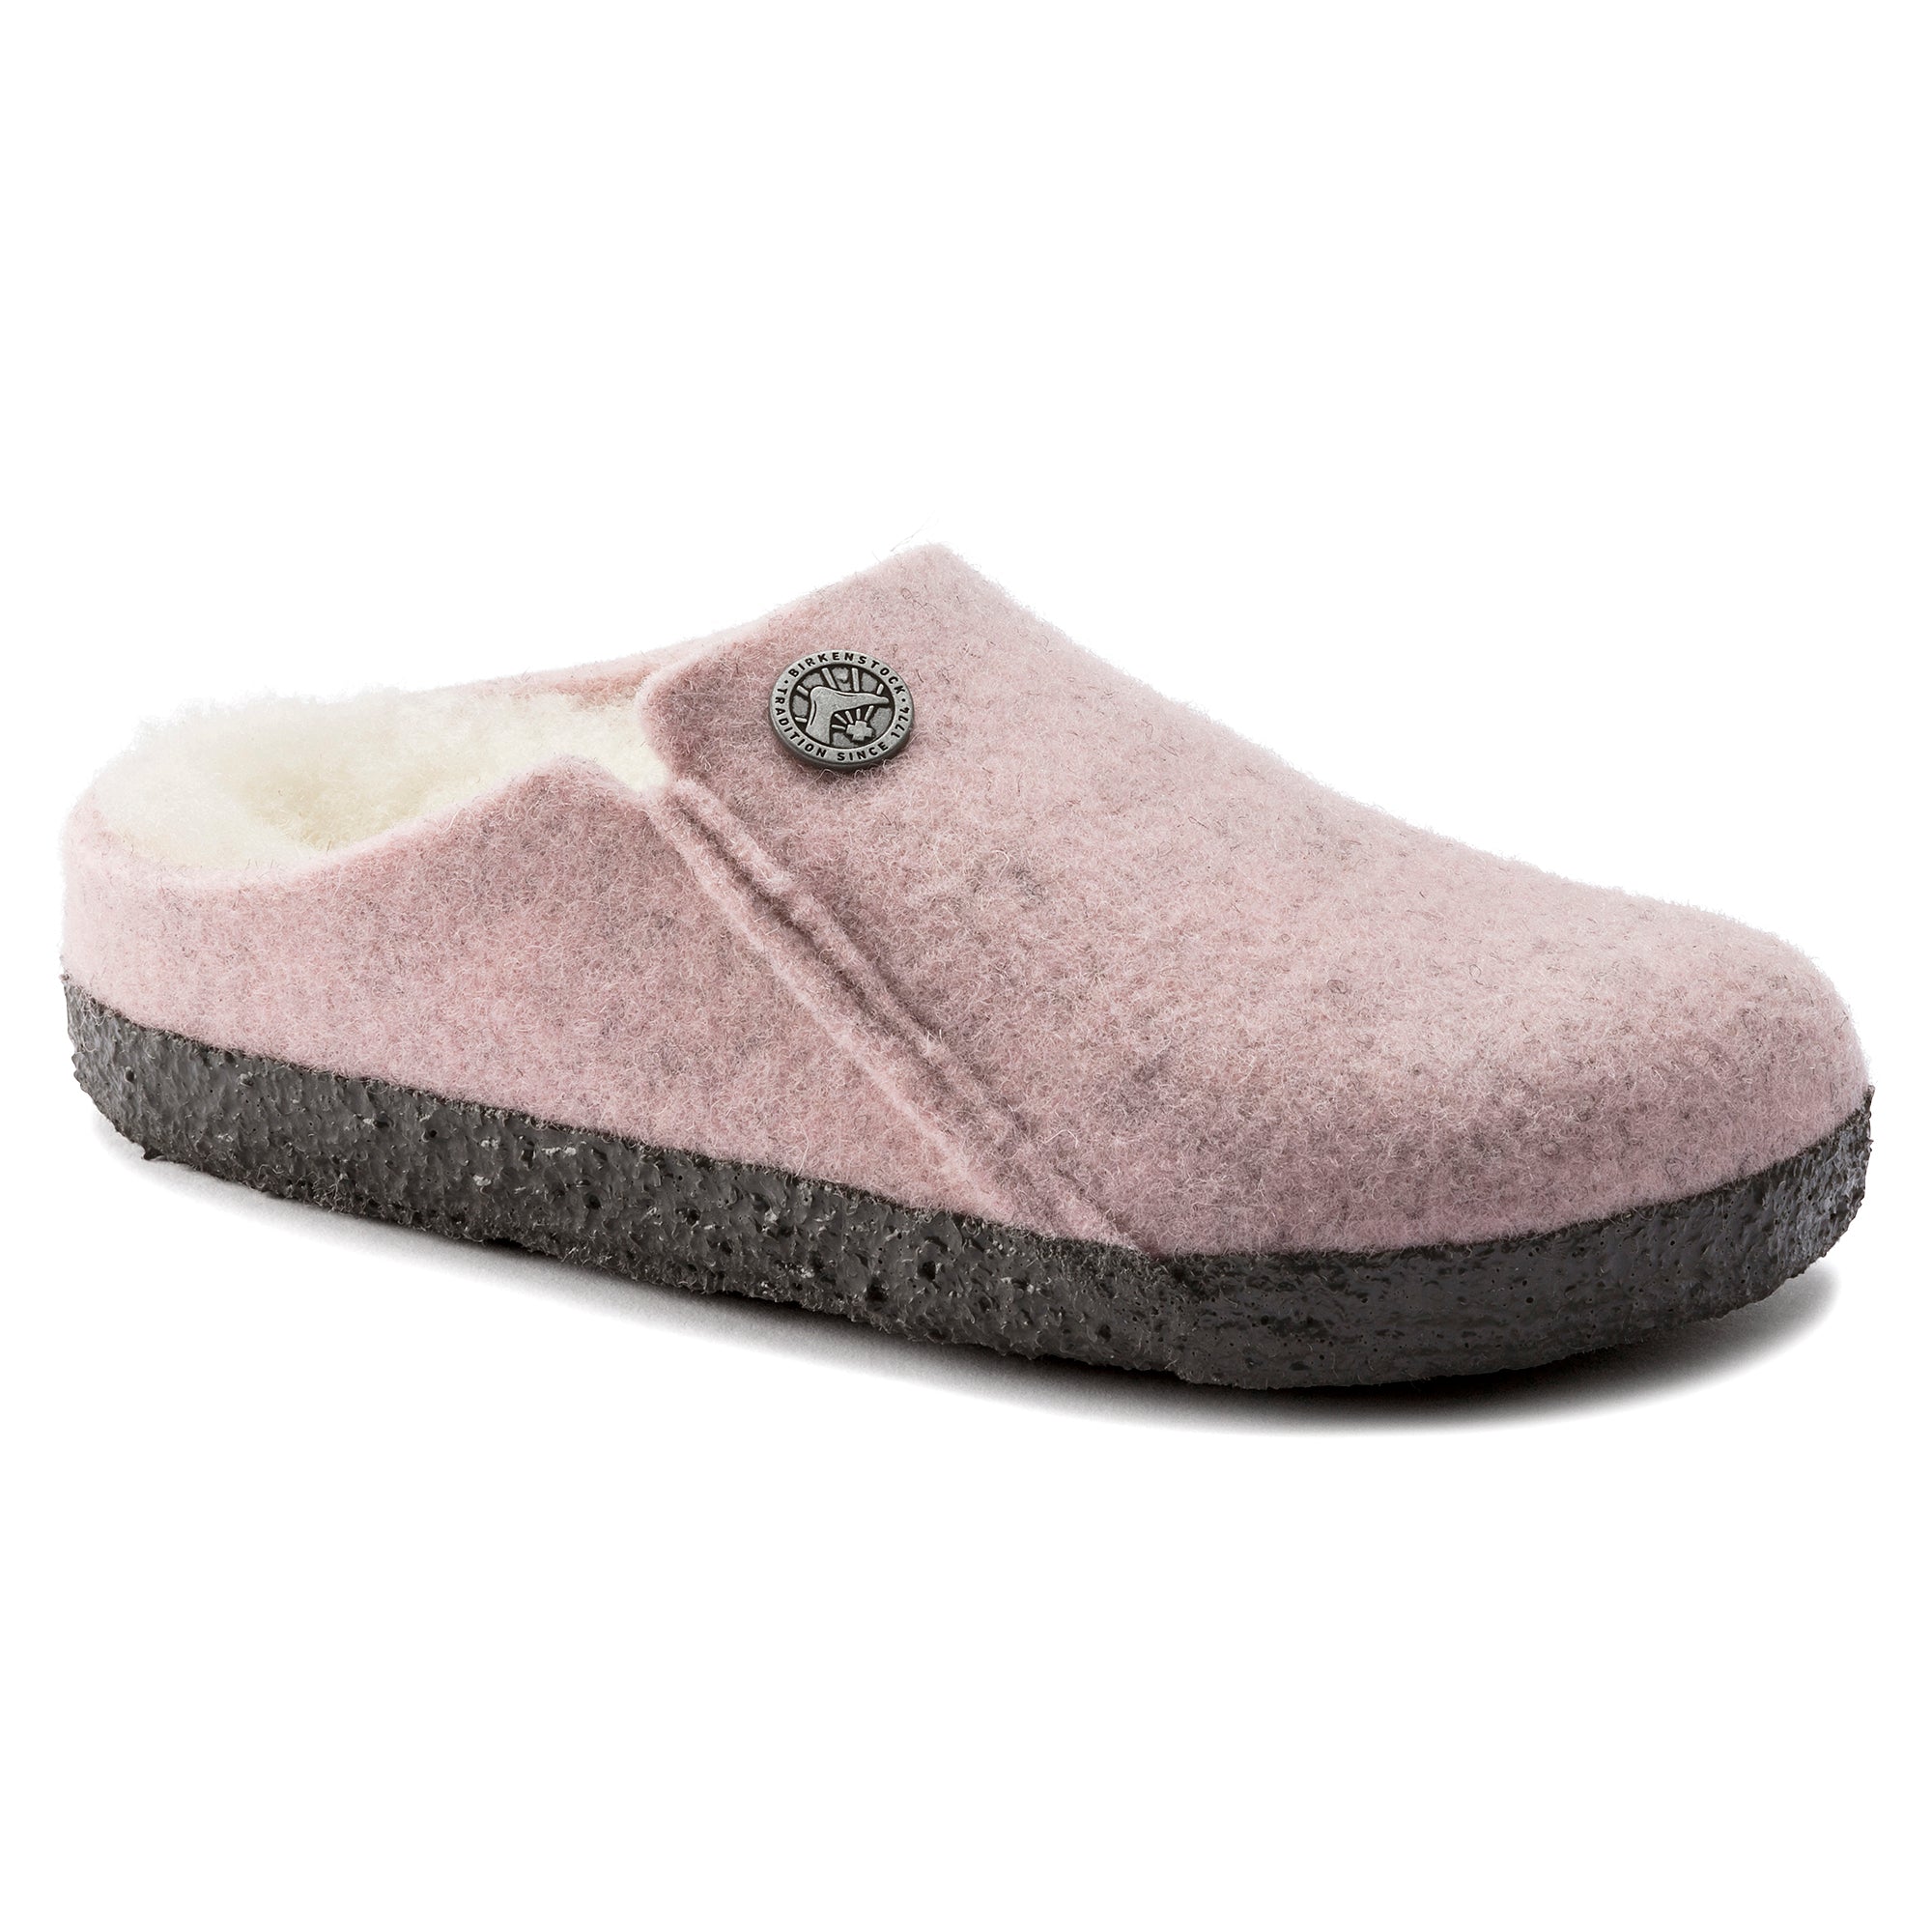 Birkenstock Kids Limited Edition Zermatt soft pink wool/natural shearling